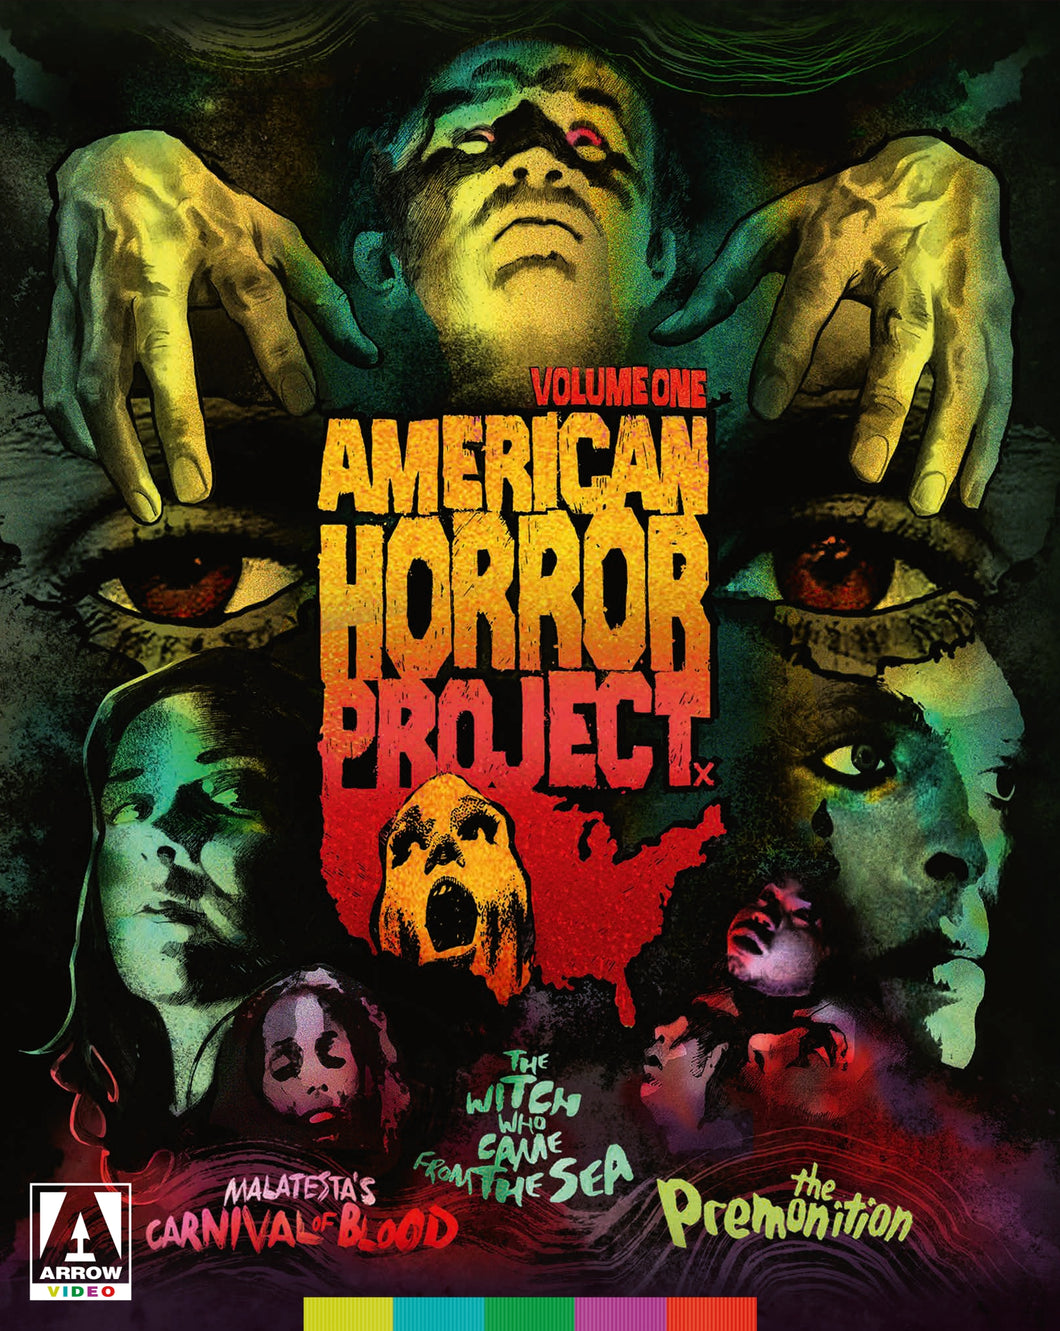 American Horror Project Vol 1 (Blu-ray)